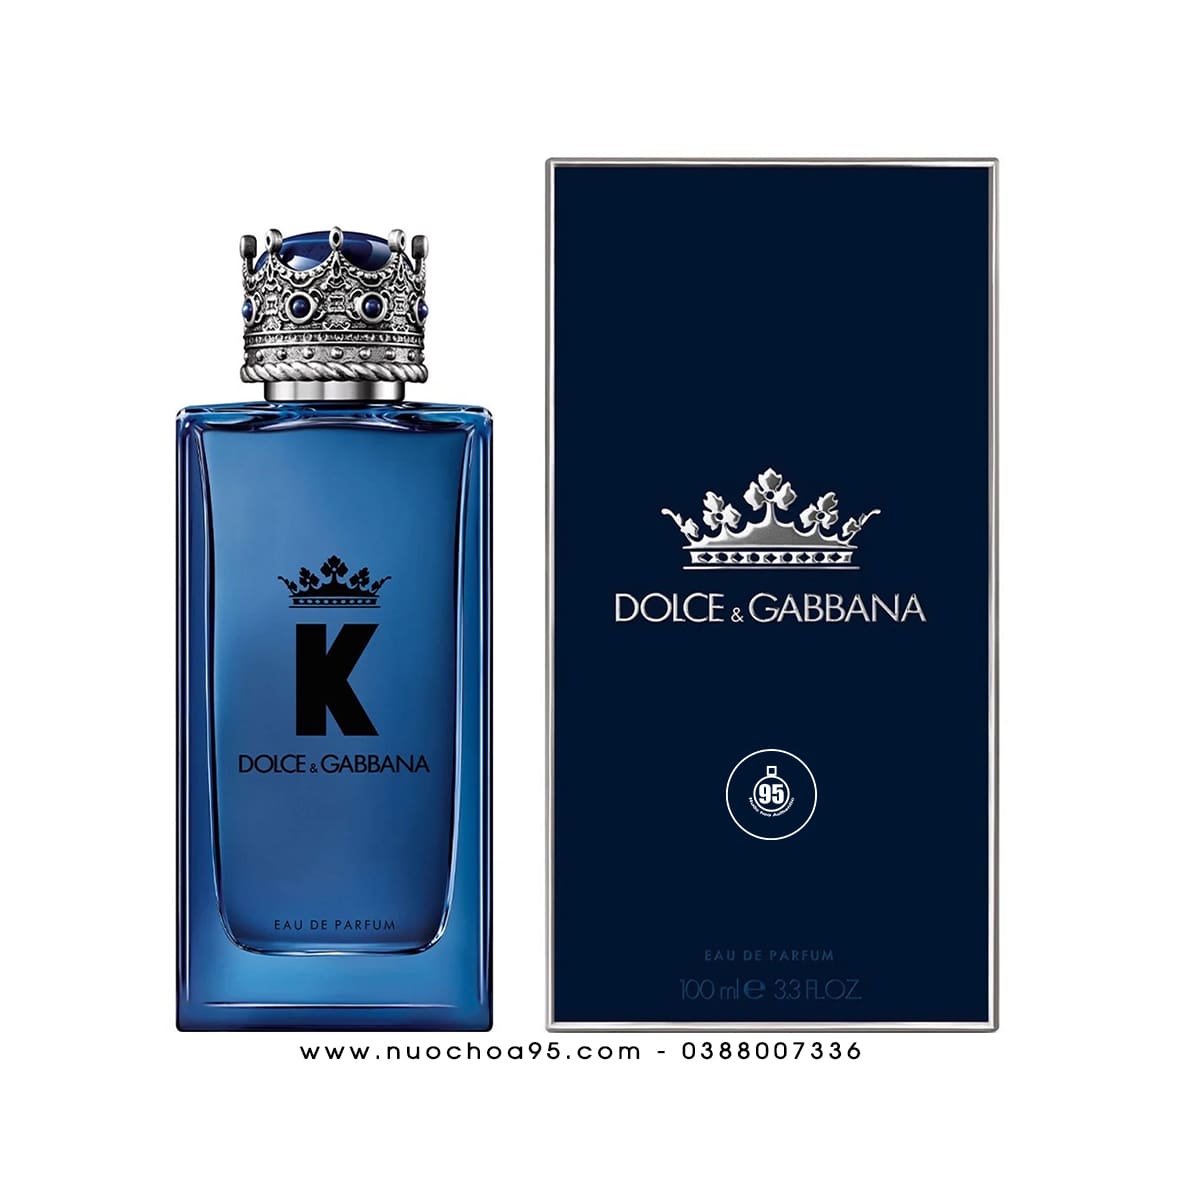 Nước hoa Dolce & Gabbana K Eau De Parfum